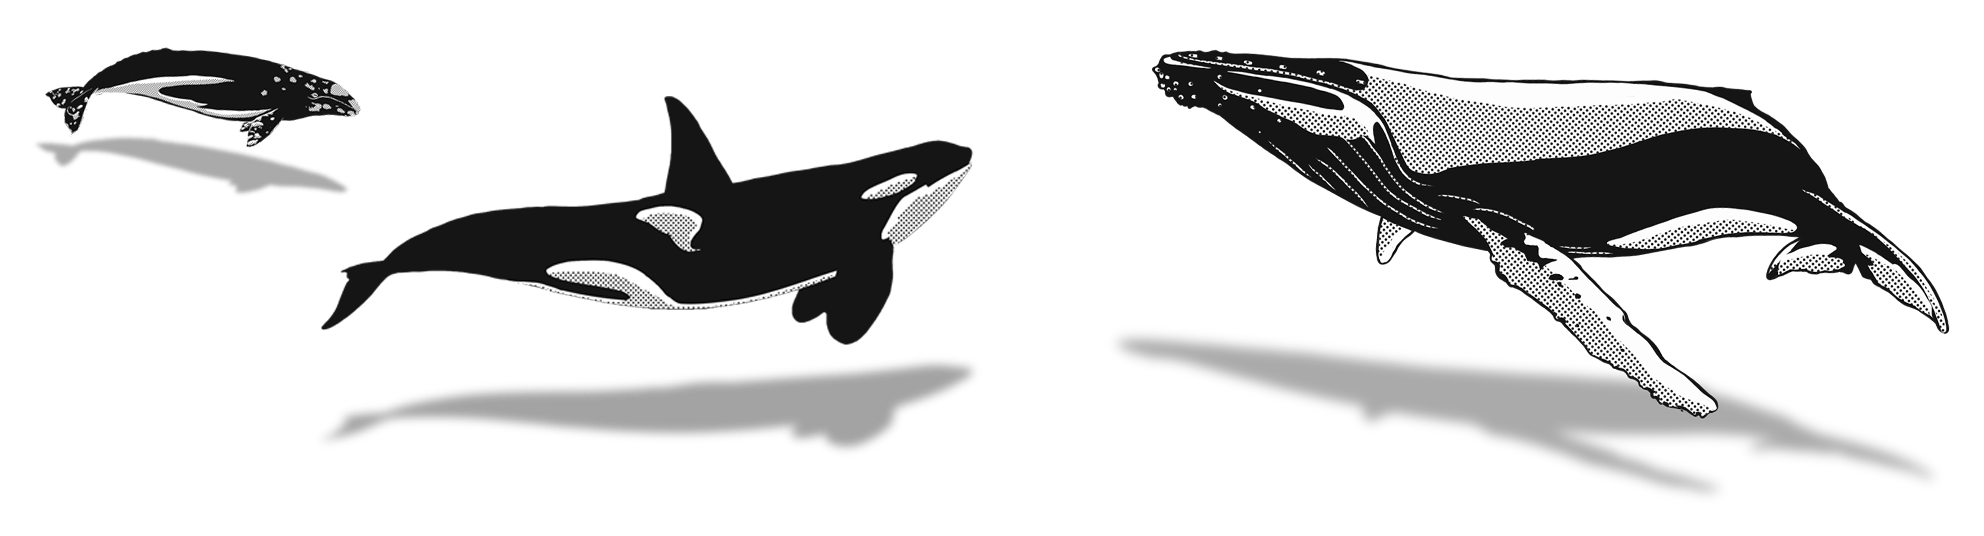 Orca clipart whale.